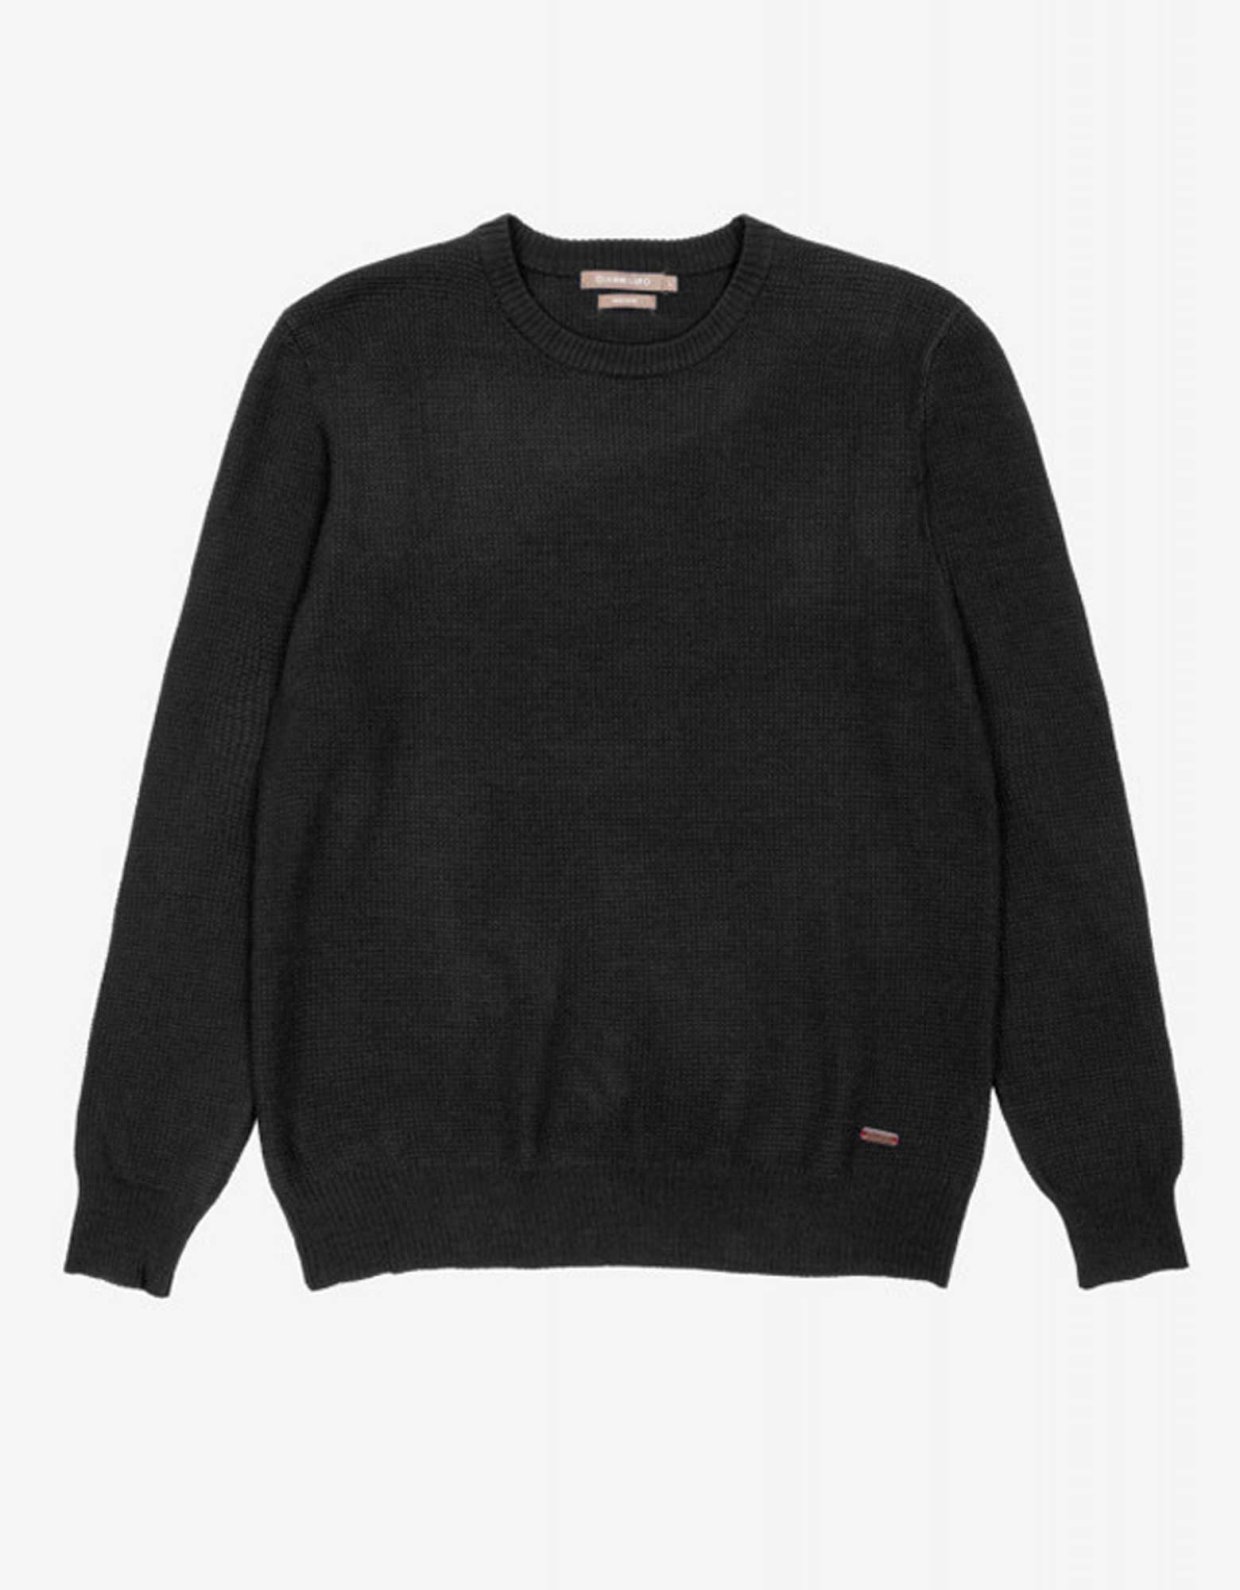 Gianni Lupo Black ribbed sweater